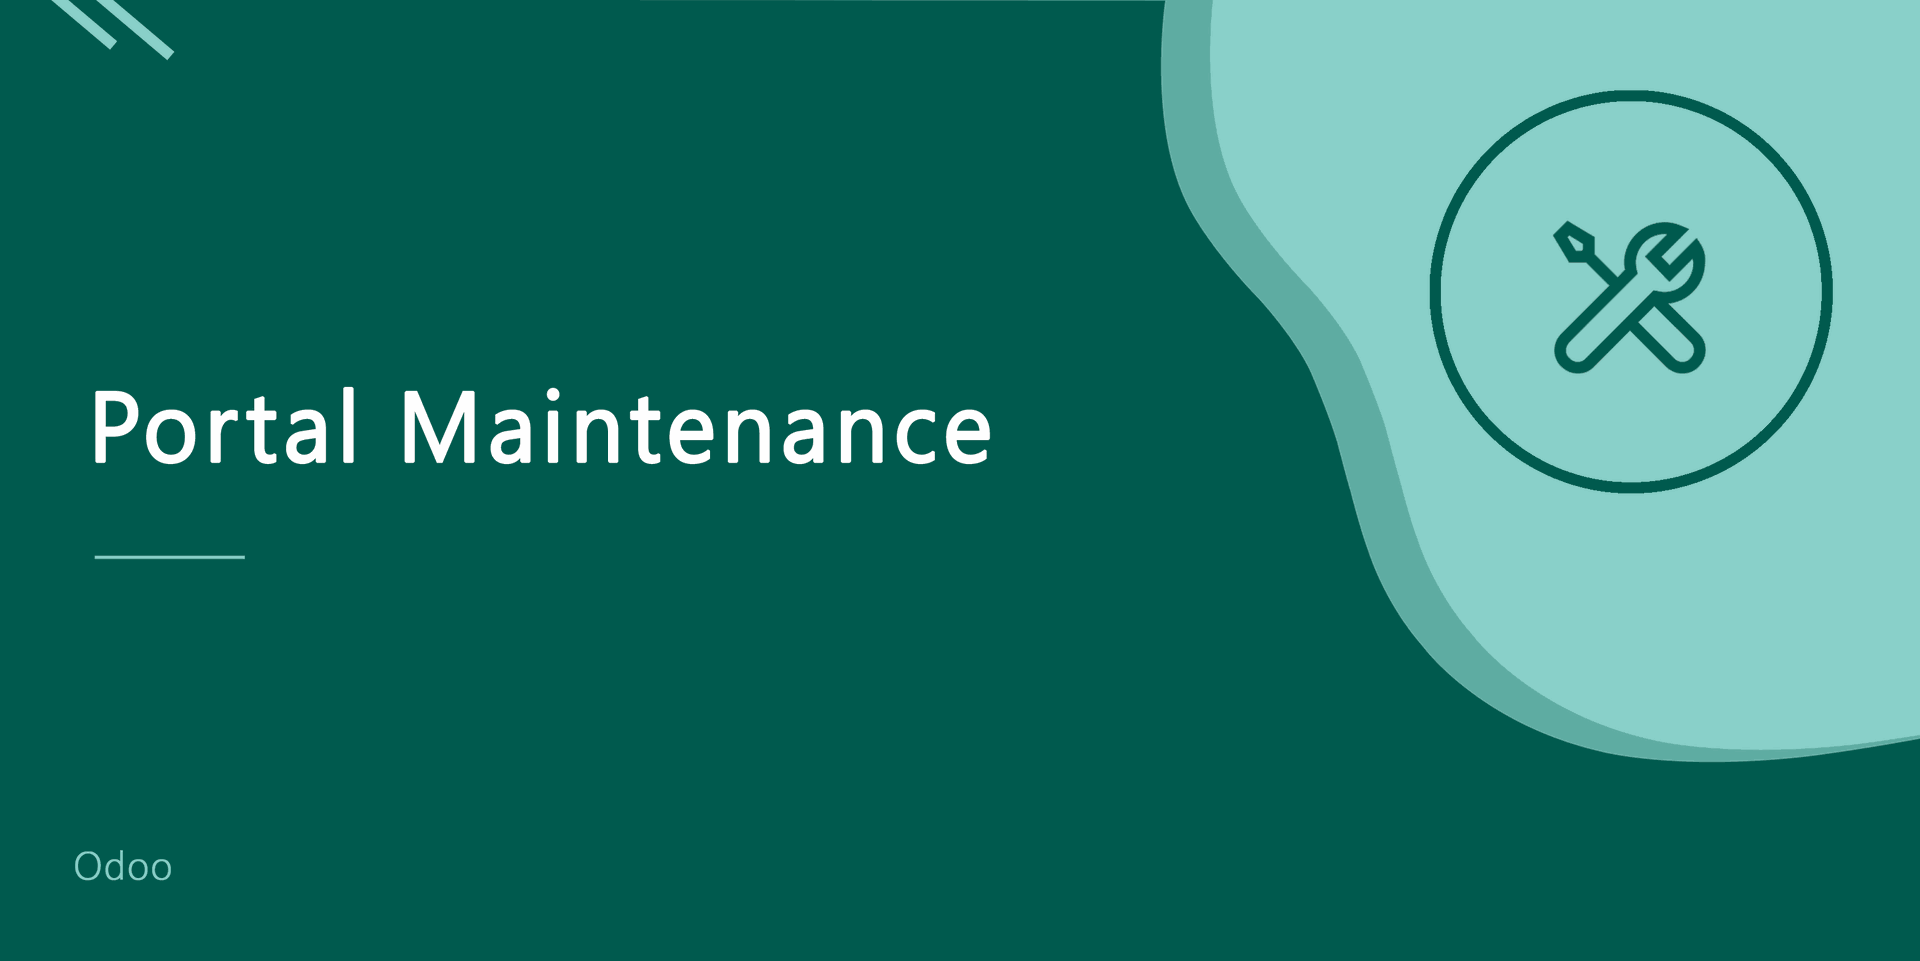 Portal Maintenance
